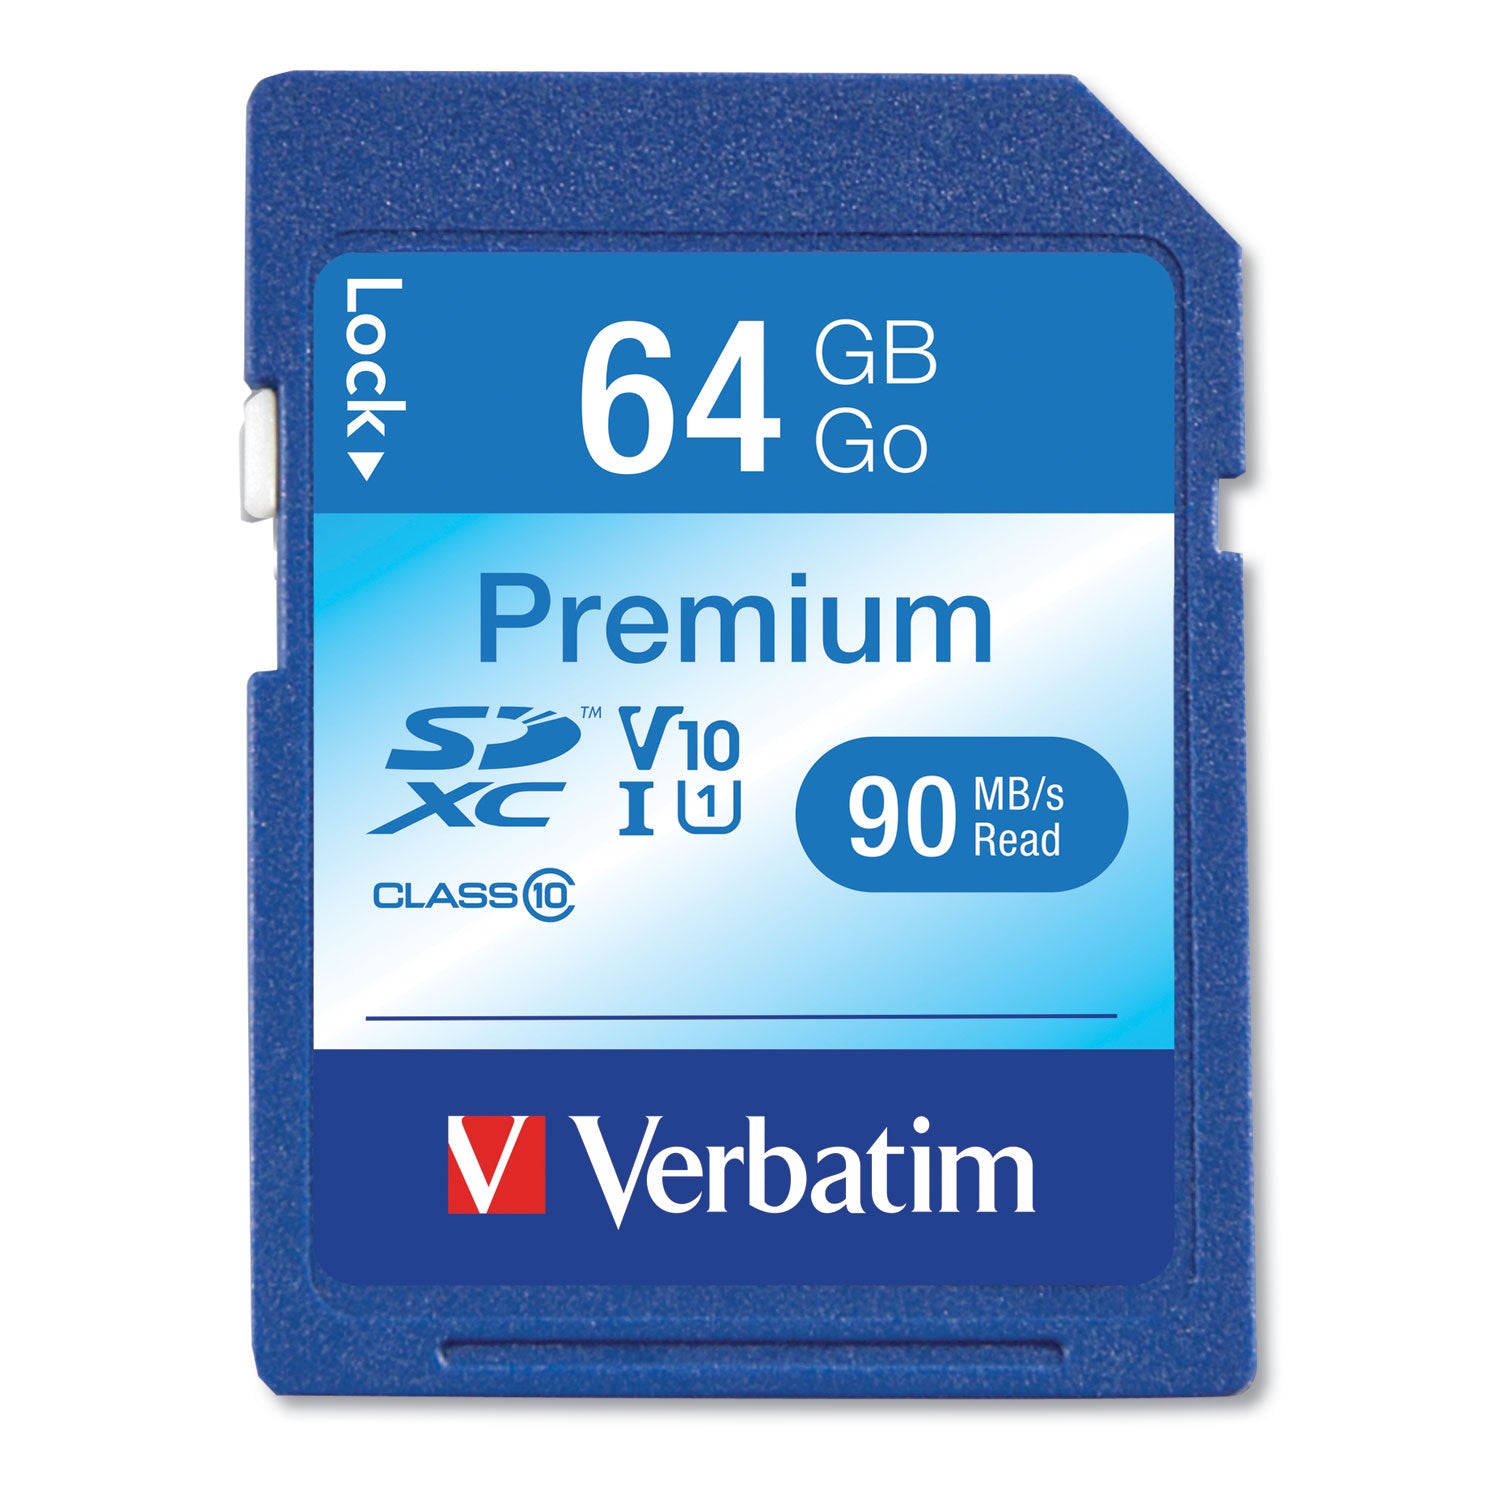 64gb-premium-sdxc-memory-card-uhs-i-v10-u1-class-10-up-to-90mb-s-read-speed_ver44024 - 1